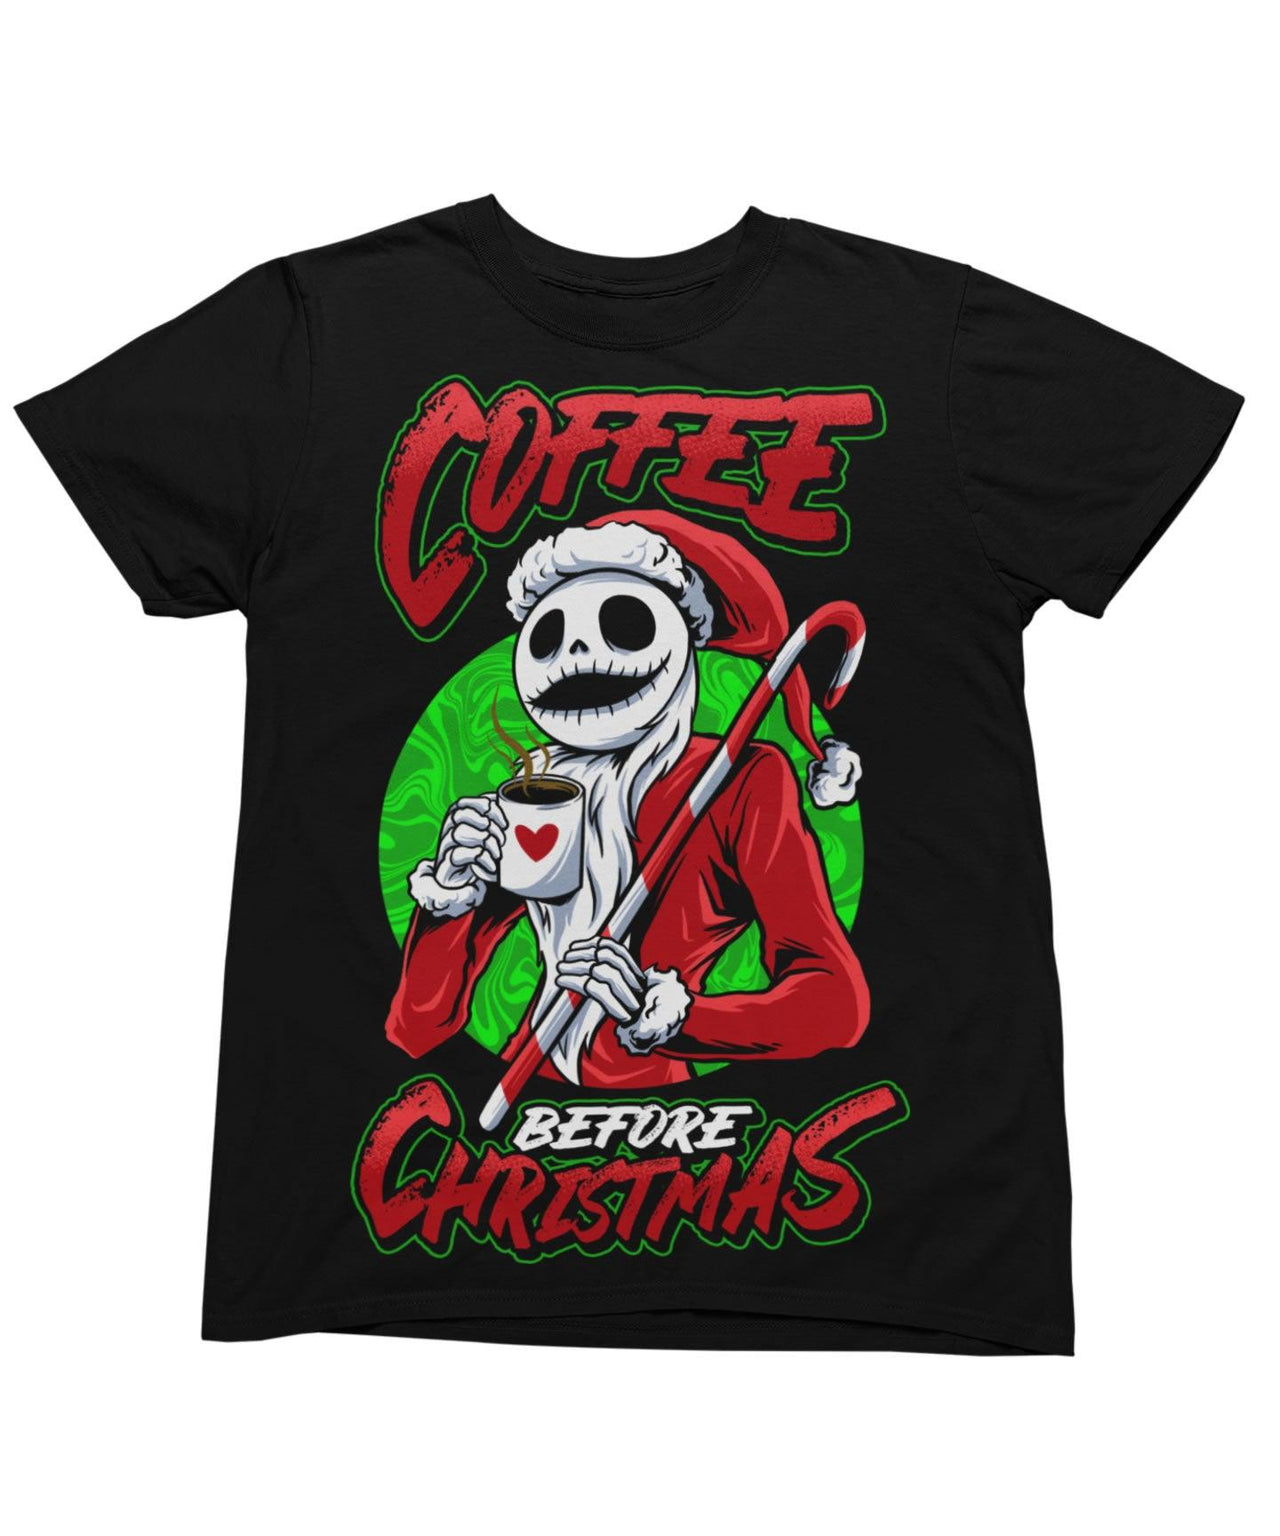 Coffee Before Christmas Unisex Mens Graphic T-Shirt 8Ball